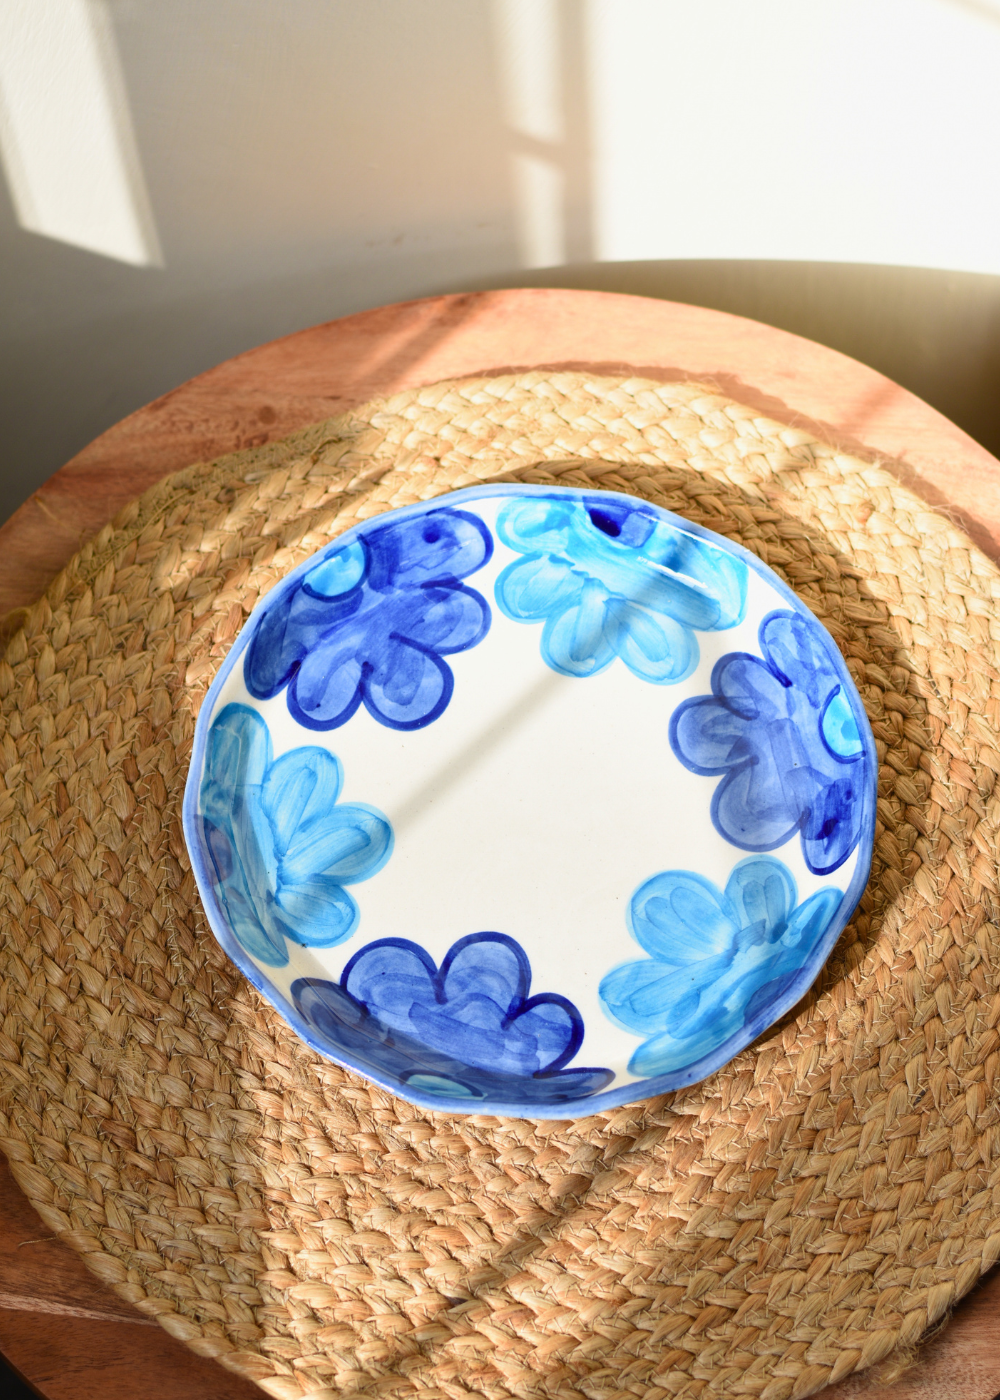 Blue floral plate on a mat